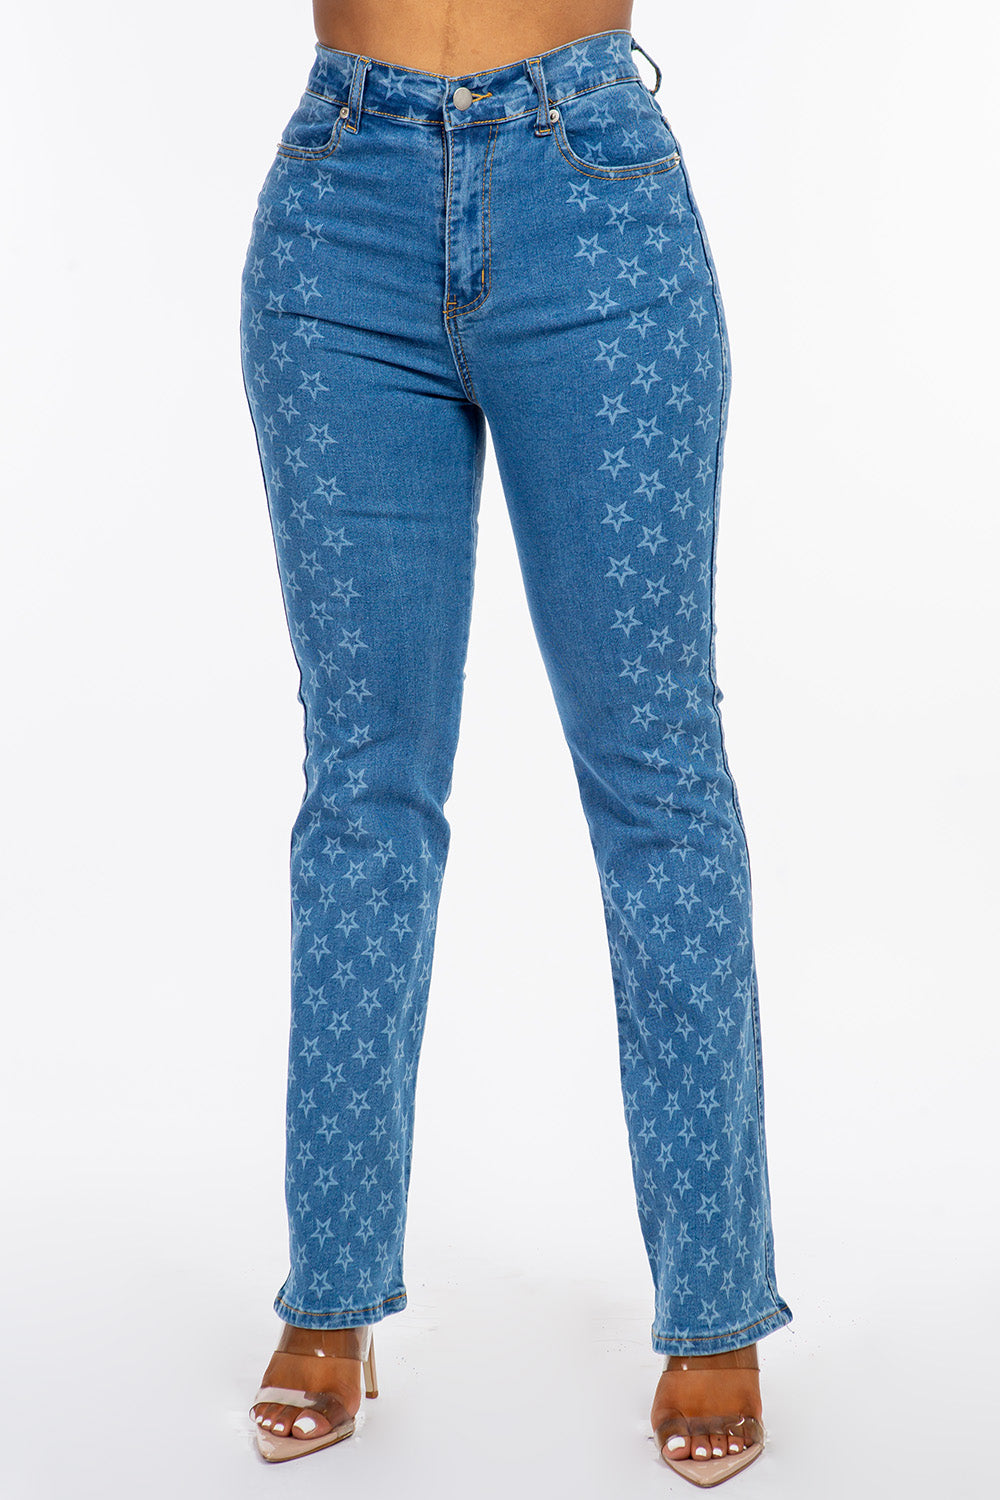 Wholesale High Rise Bootcut Jeans TURTLE Blue Star Print @ Jean – BLUE Turtle